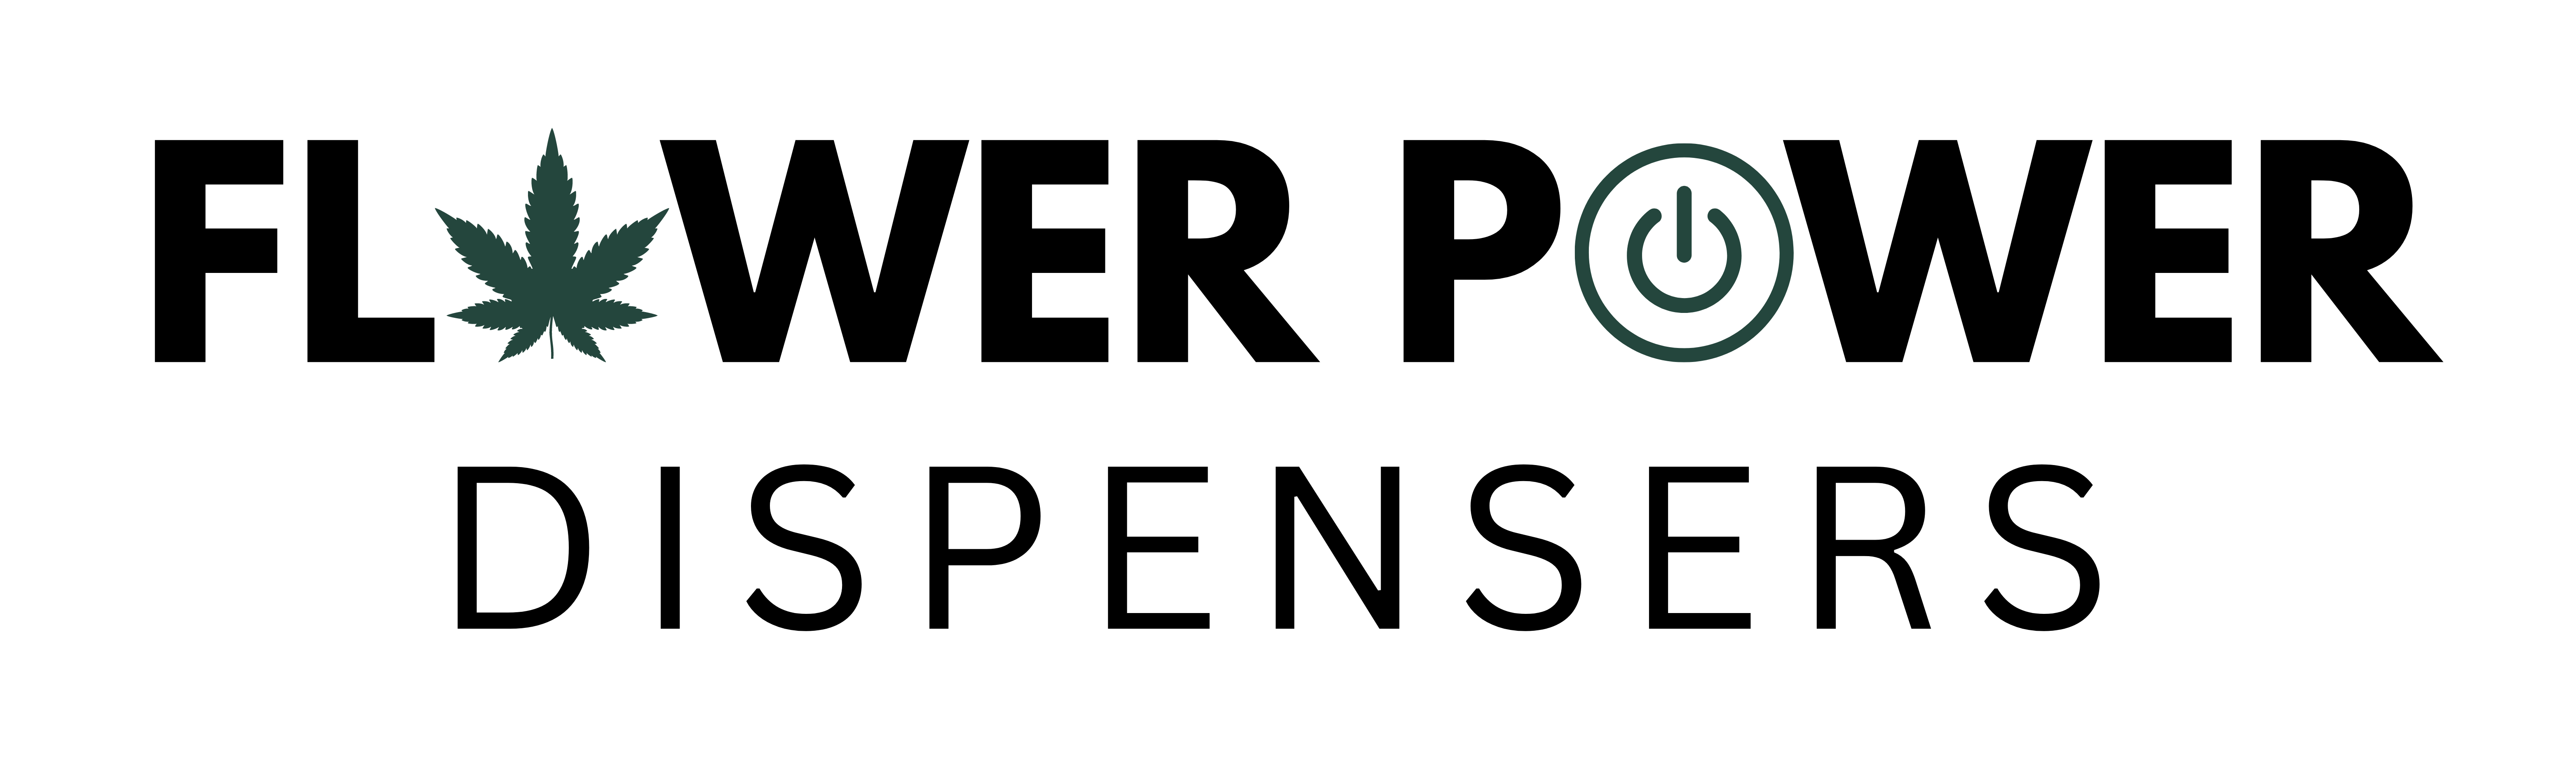 Flower Power Dispensers (Rec) logo